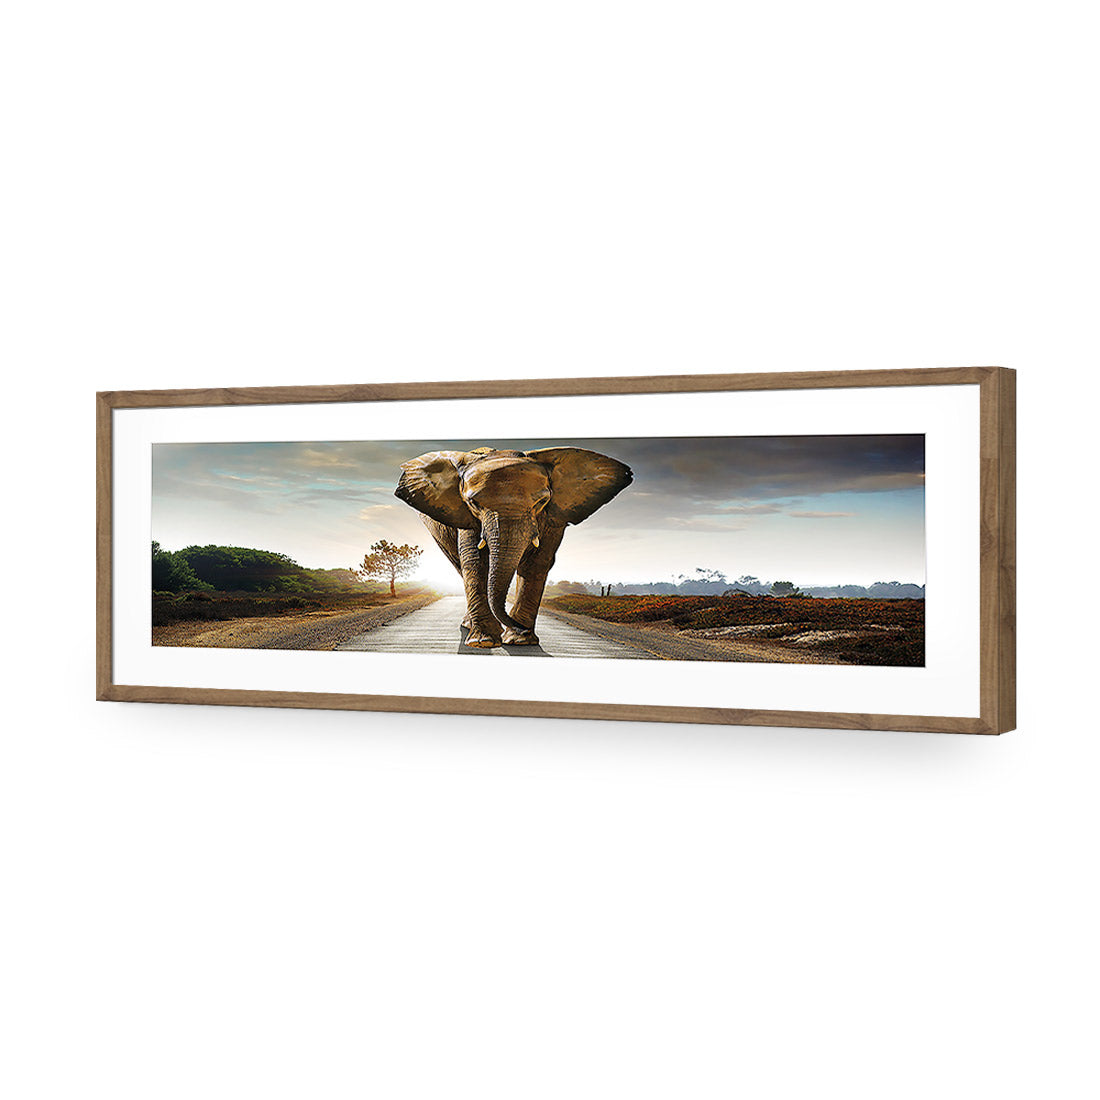 Determined Elephant, Long Acrylic Glass Art-Acrylic-Wall Art Design-With Border-Acrylic - Natural Frame-60x20cm-Wall Art Designs